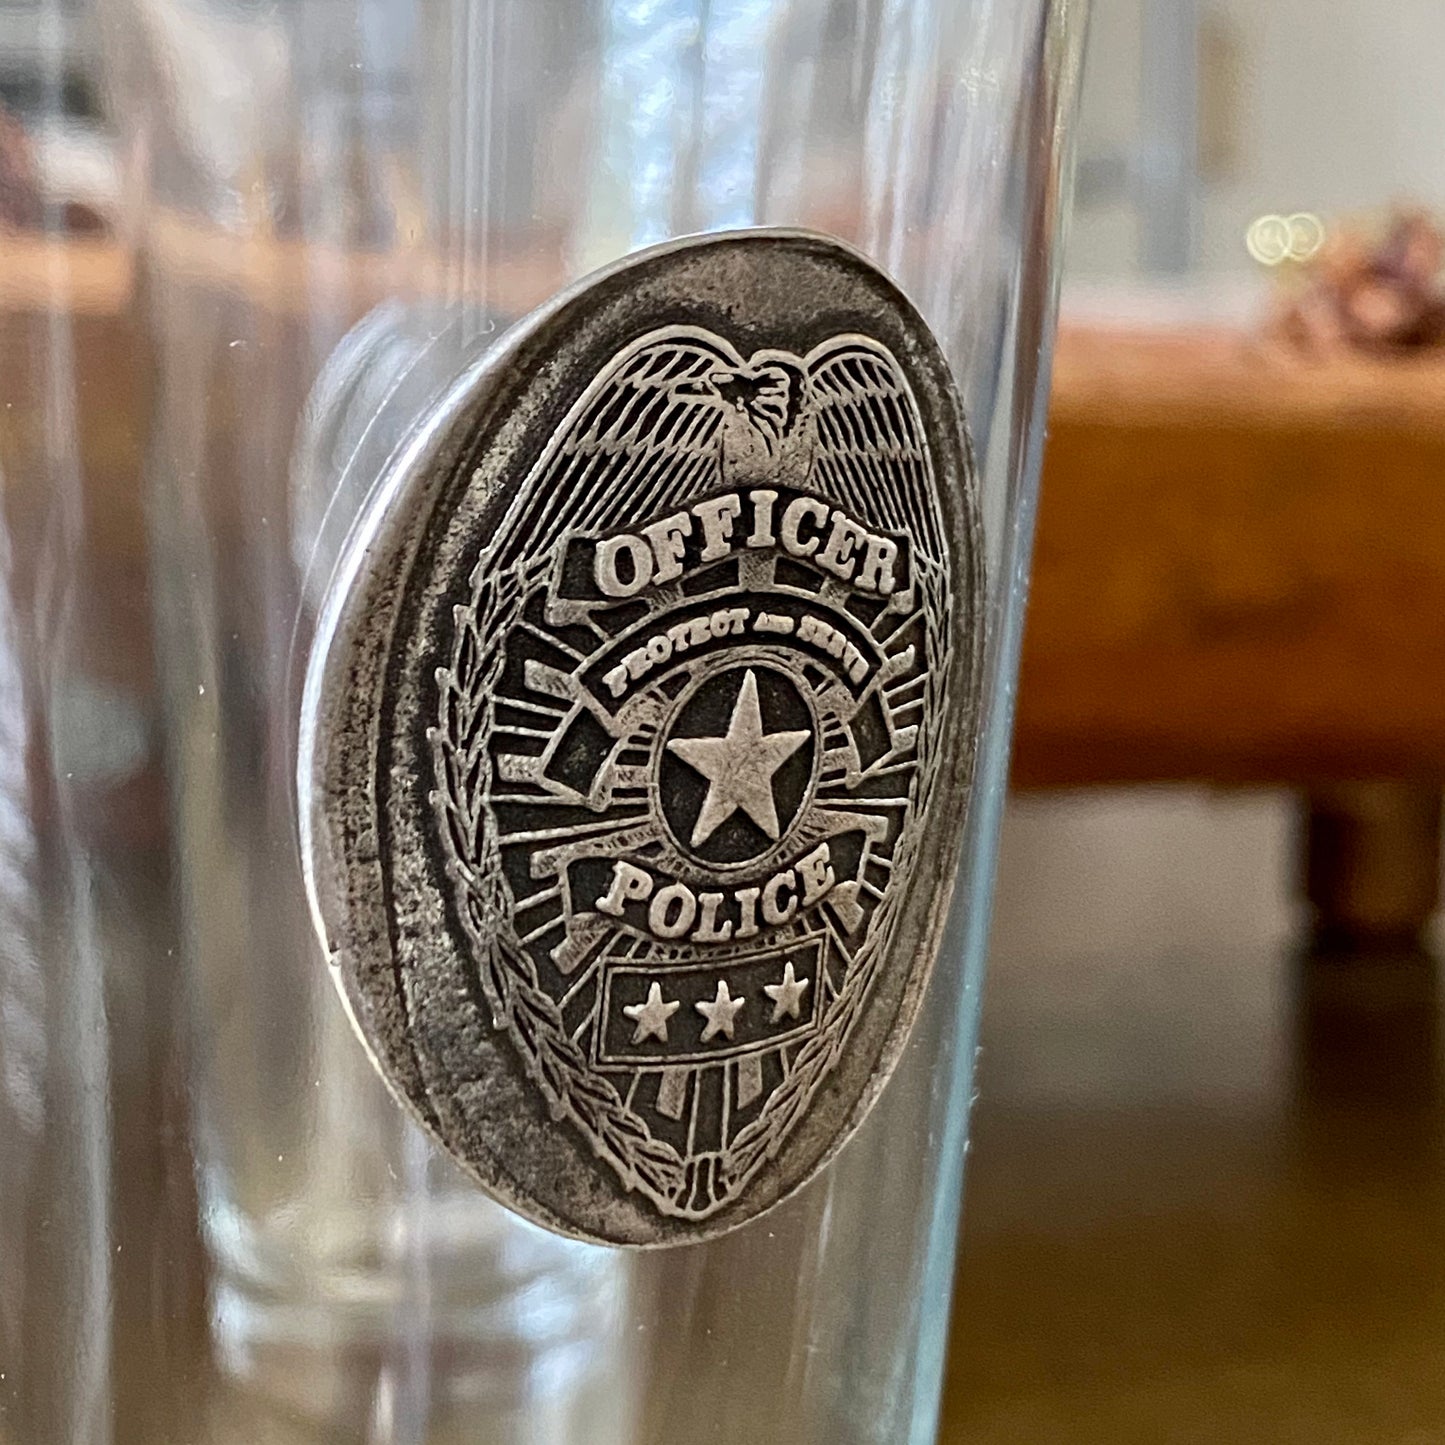 NEW Custom Set of Beer Glasses, Police Badge, Law Enforcement, American Pint Beer Glasses, thin blue line, BW-013